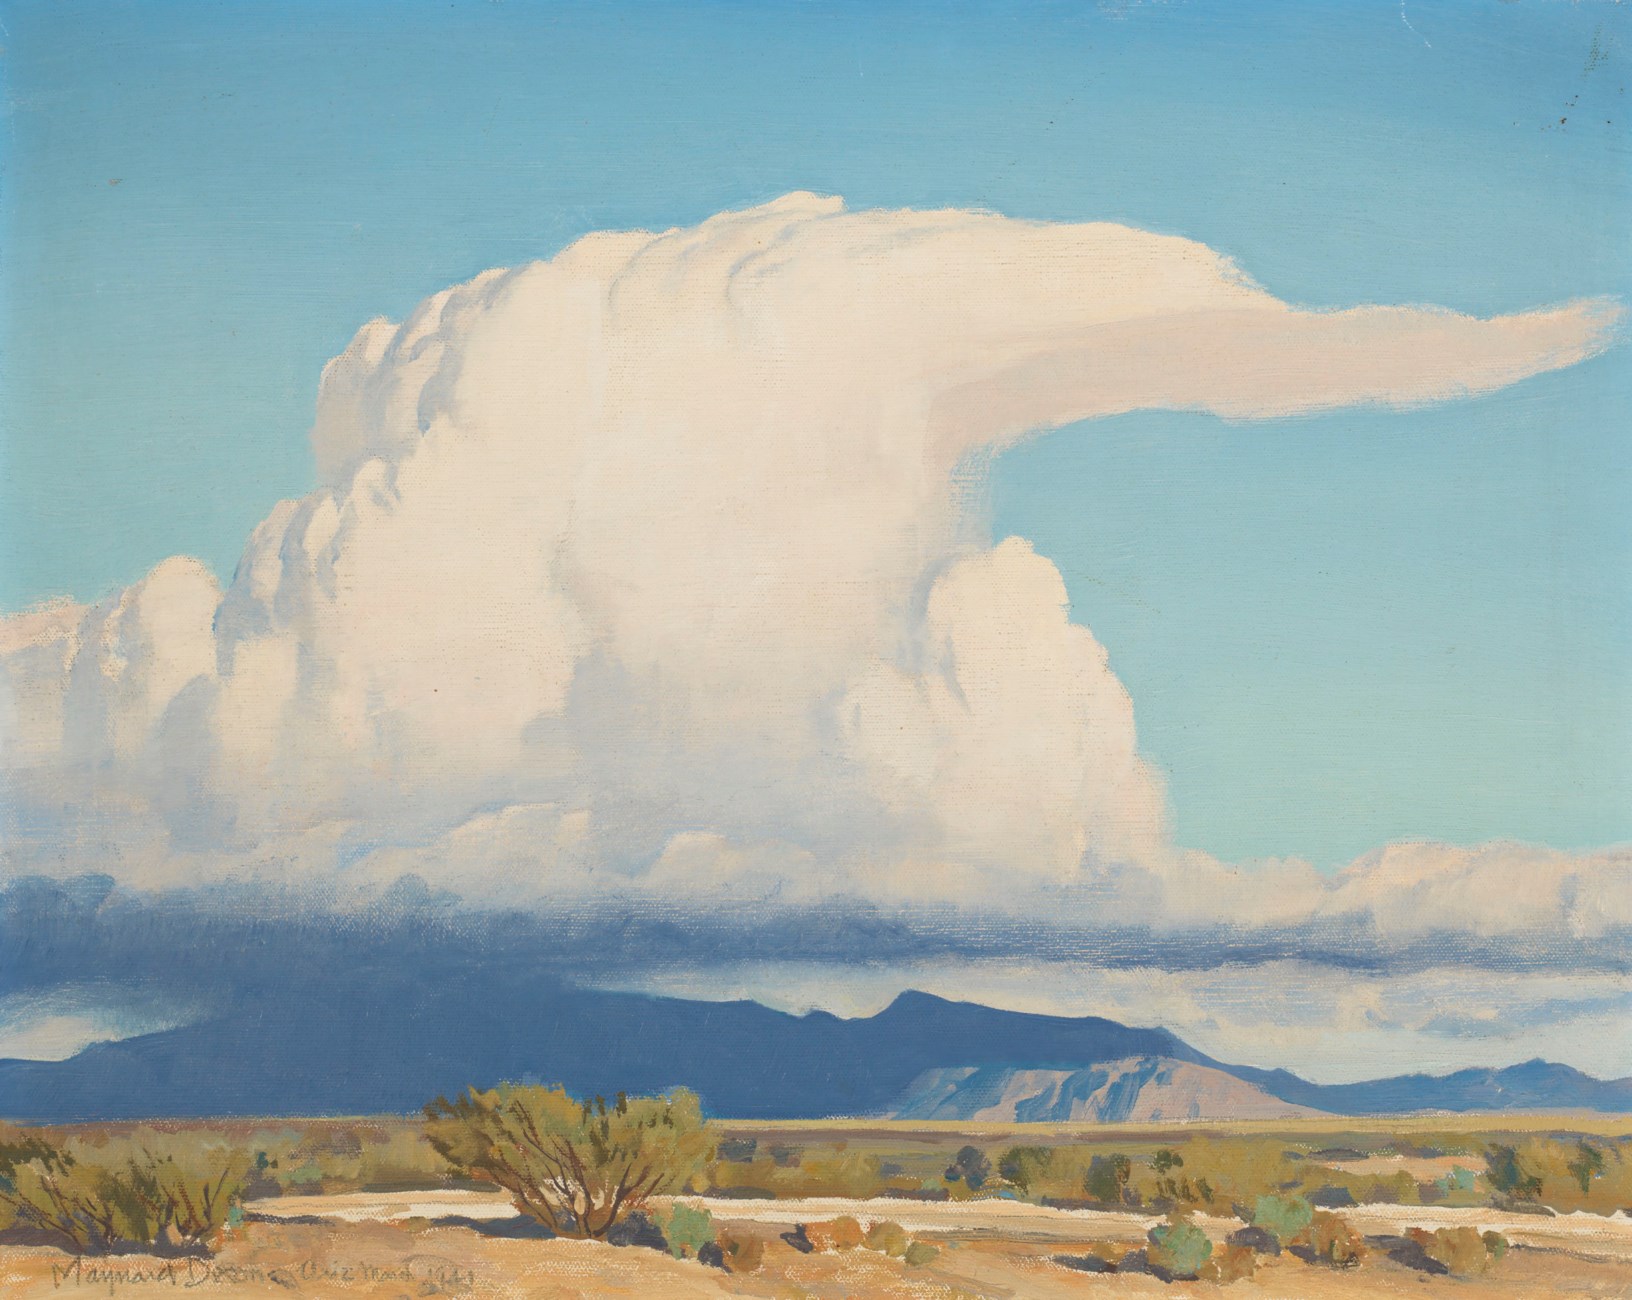 Nor by Maynard Dixon - 1941 - 40.6 x 50.8 cm 